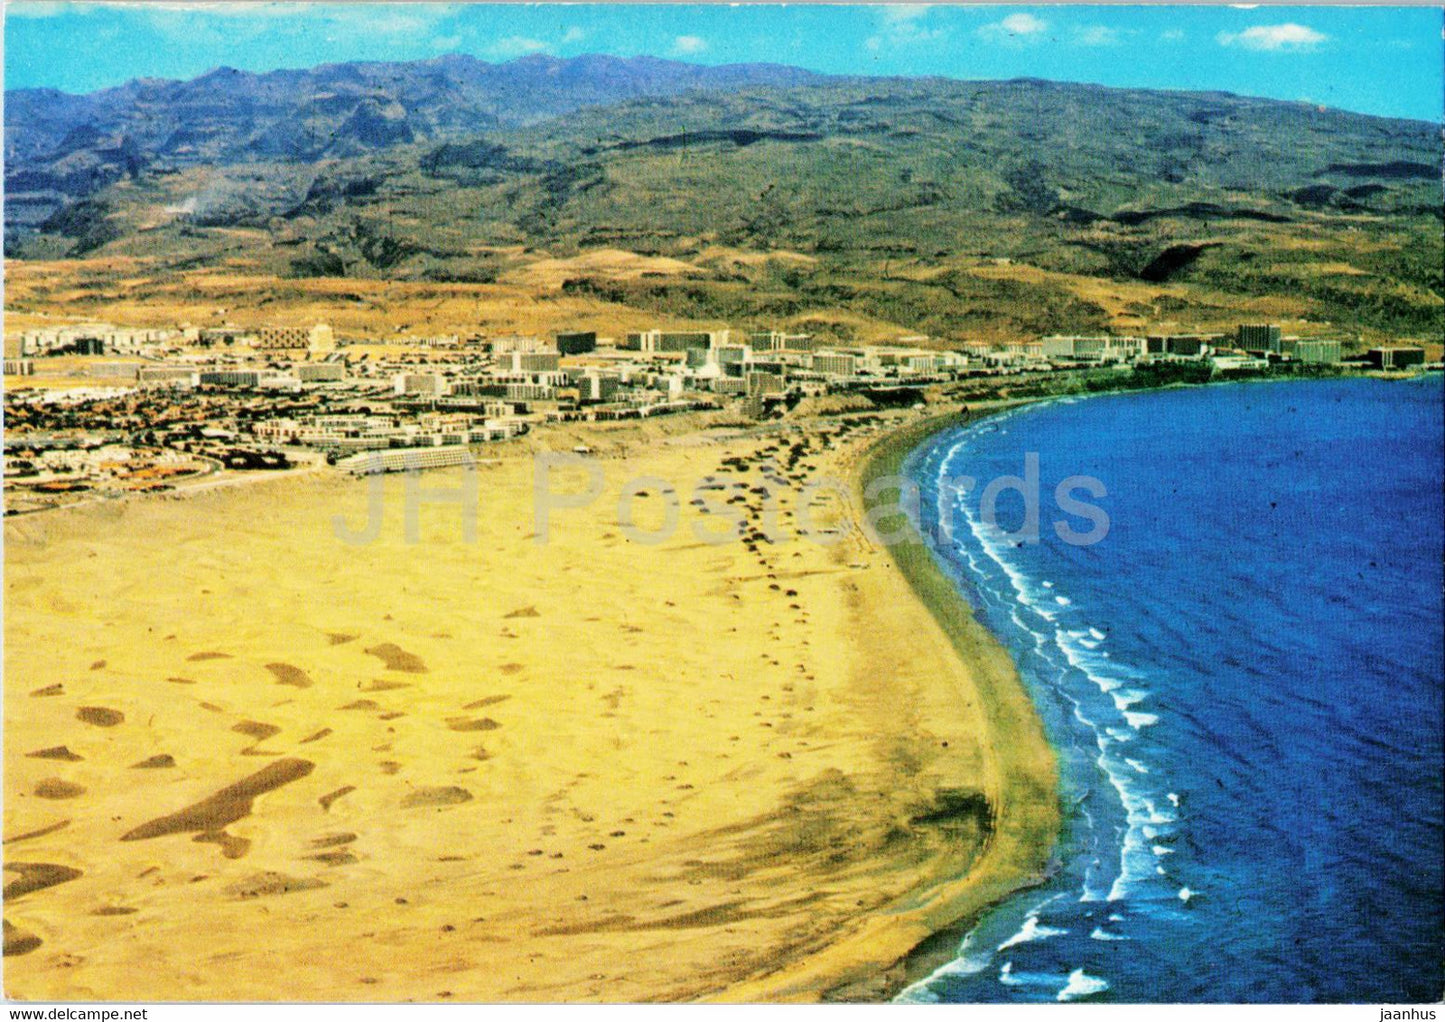 Gran Canaria - Vista Parcial - Playa del Ingles - beach - Spain - unused - JH Postcards